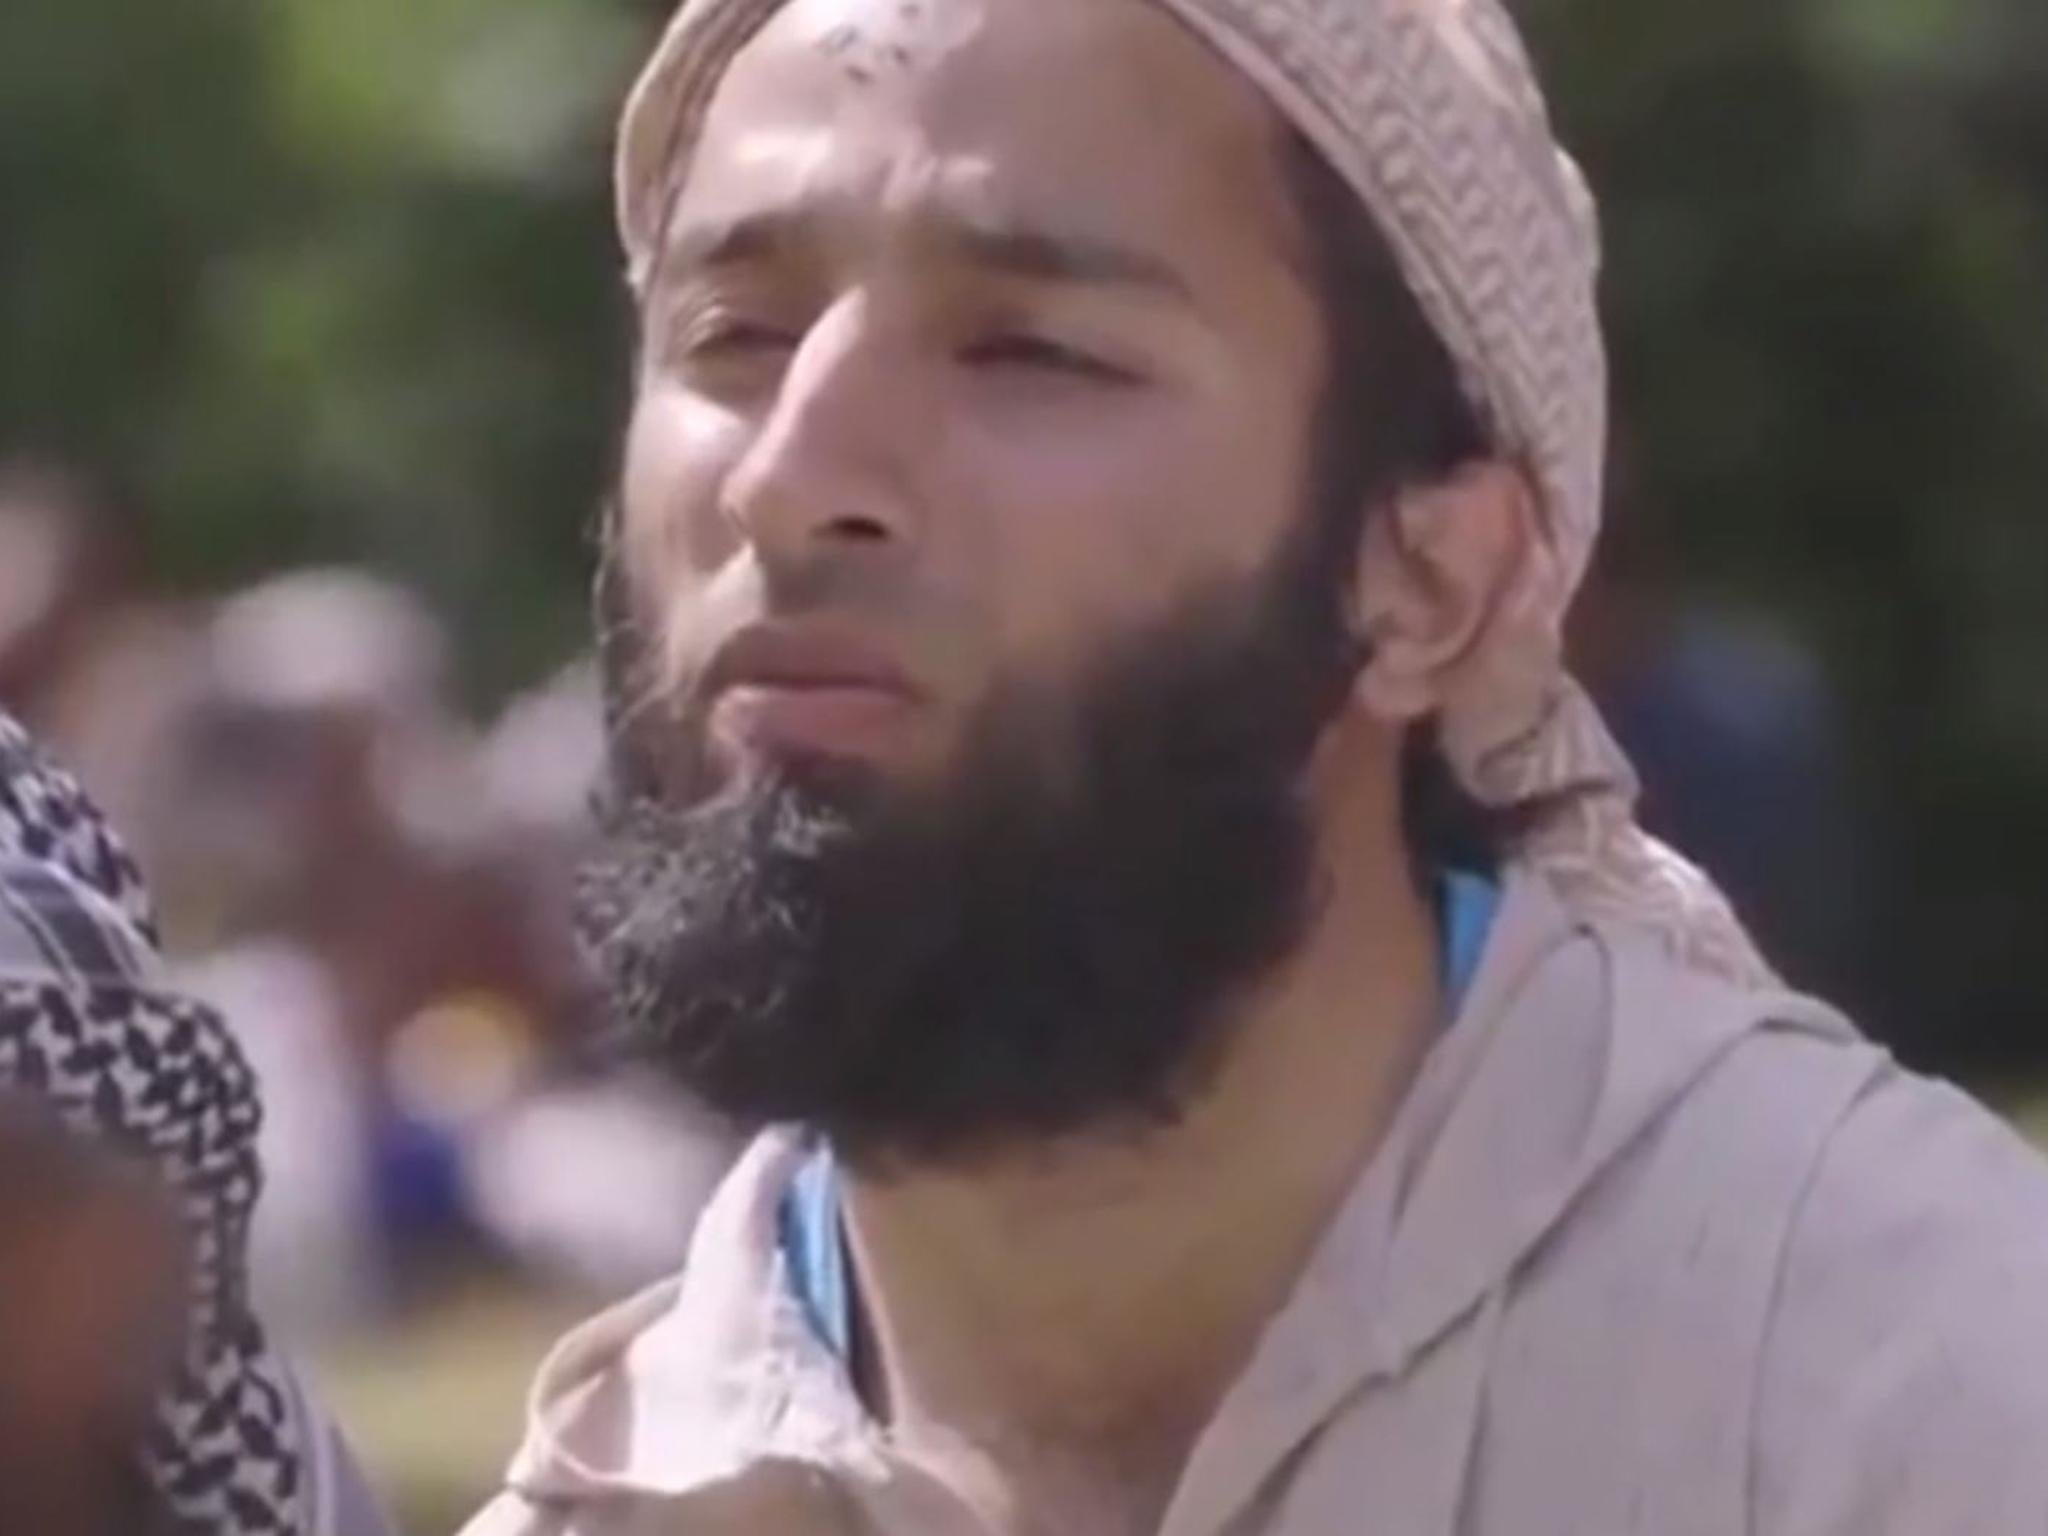 London Bridge attacker Khuram Shazad Butt, also known as ‘Abz’, in Channel 4’s ‘The Jihadis Next Door’ in 2016